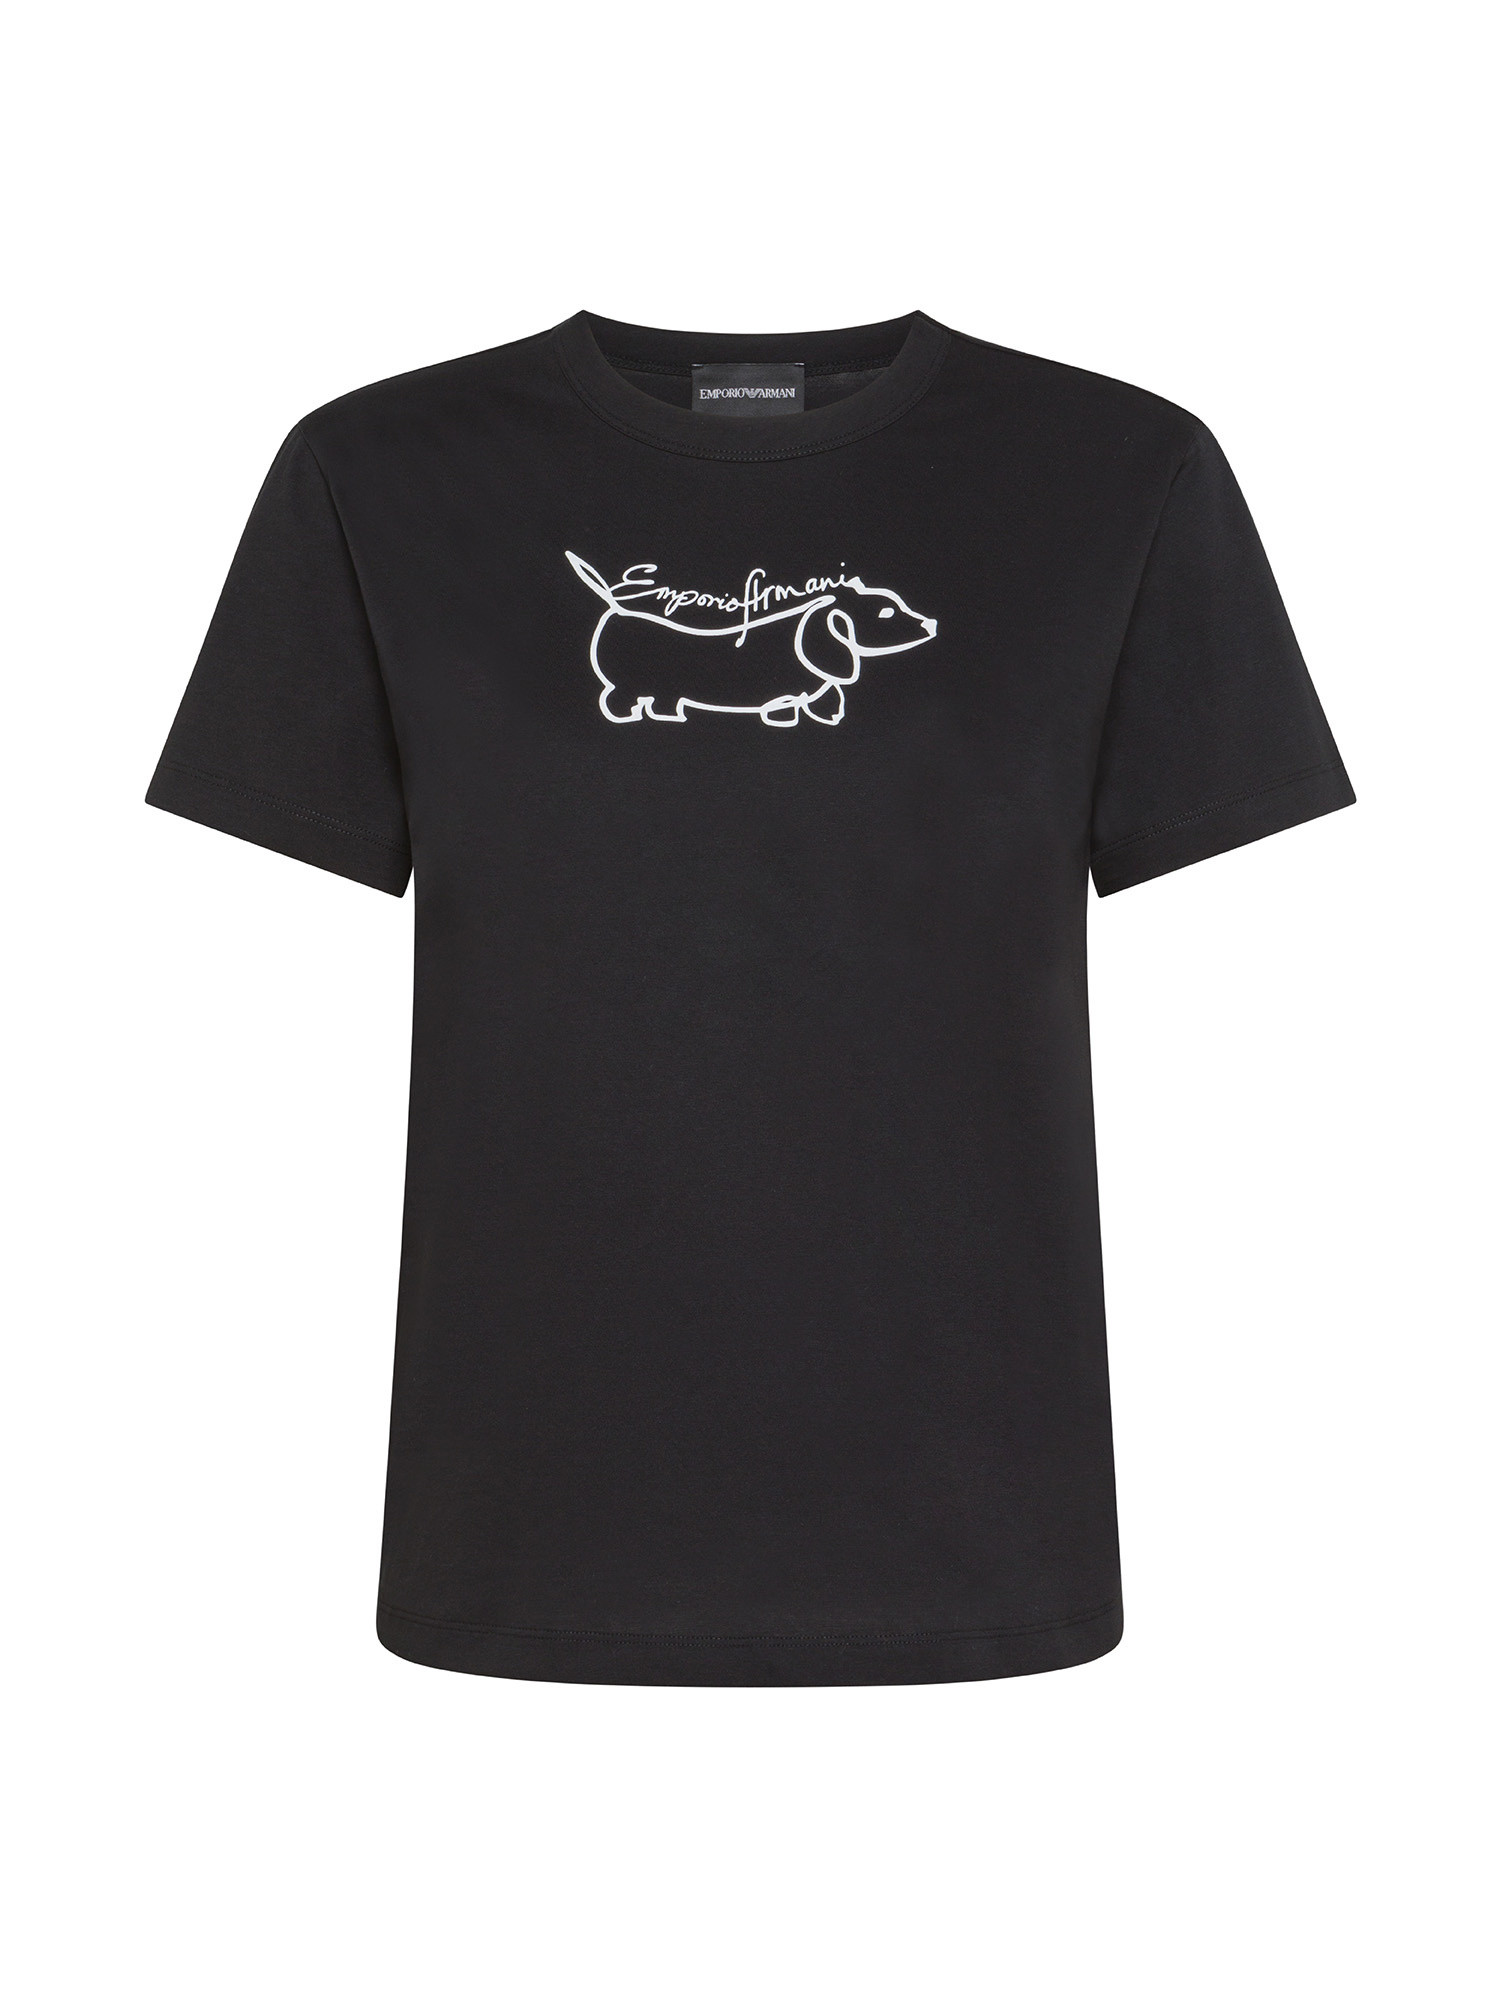 Emporio Armani - Cotton T-shirt with logo, Black, large image number 0